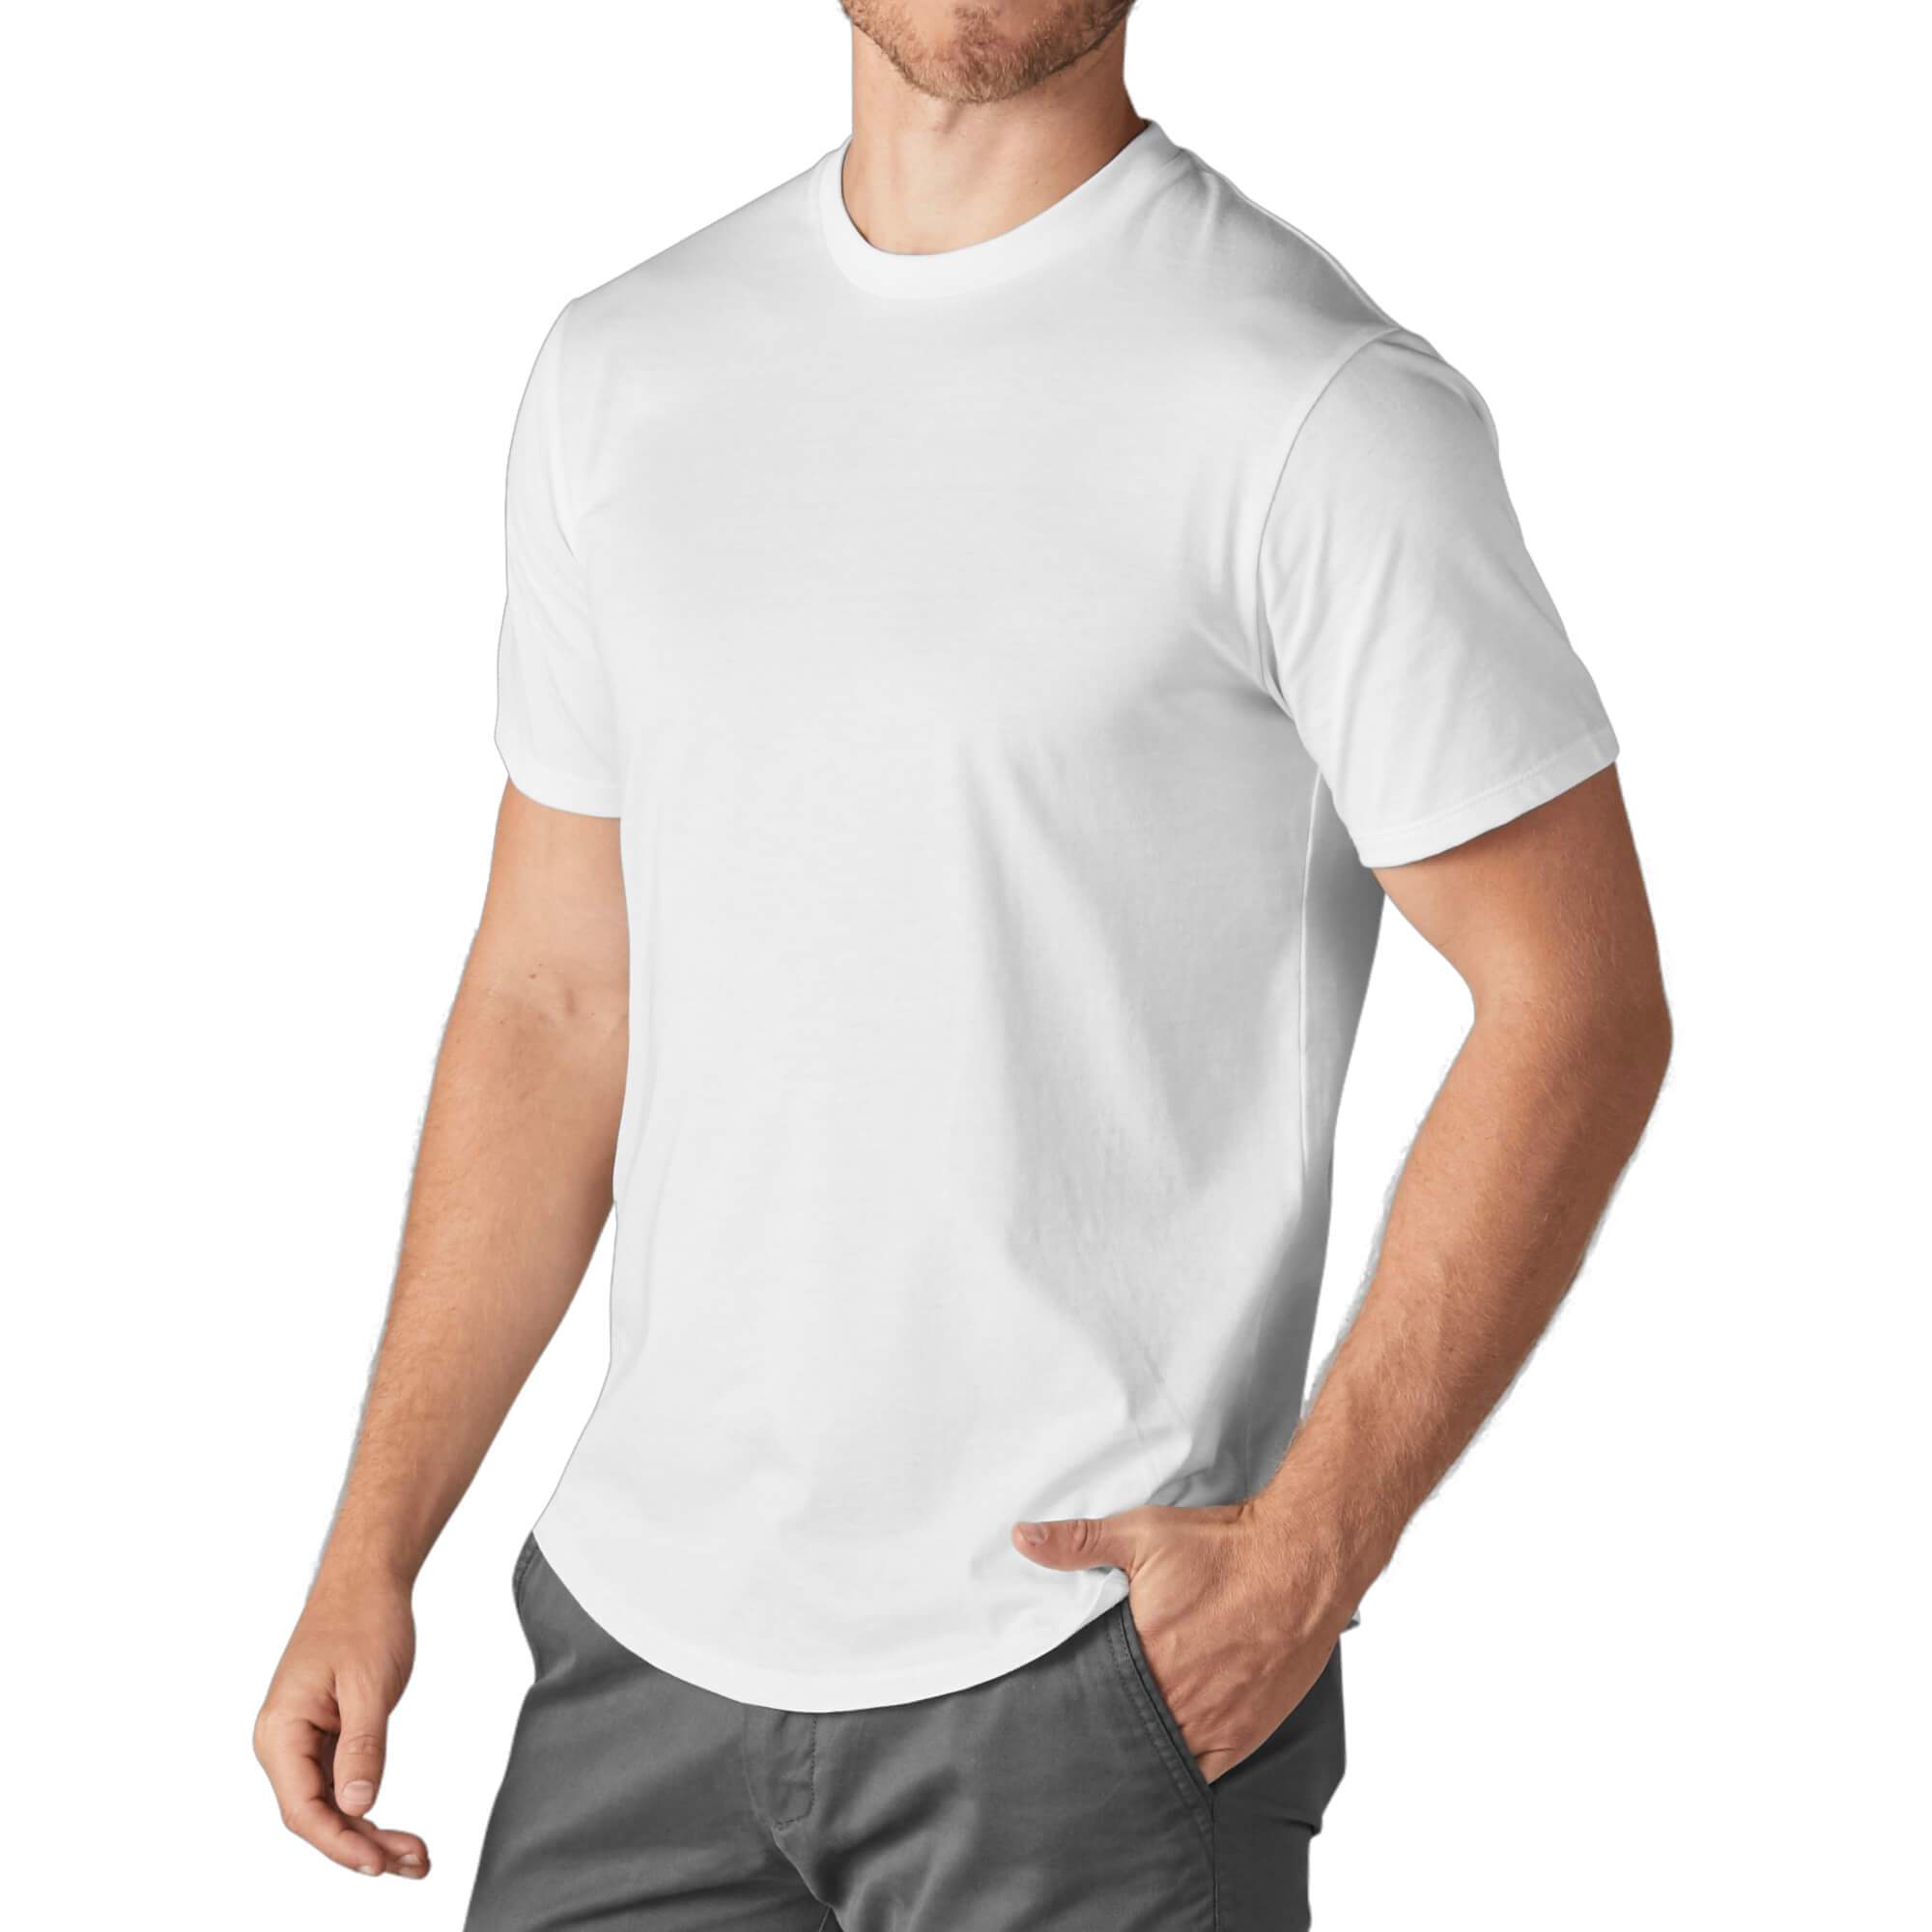 perk-mens-pima-t-shirt-bright-white-s-151984.jpg